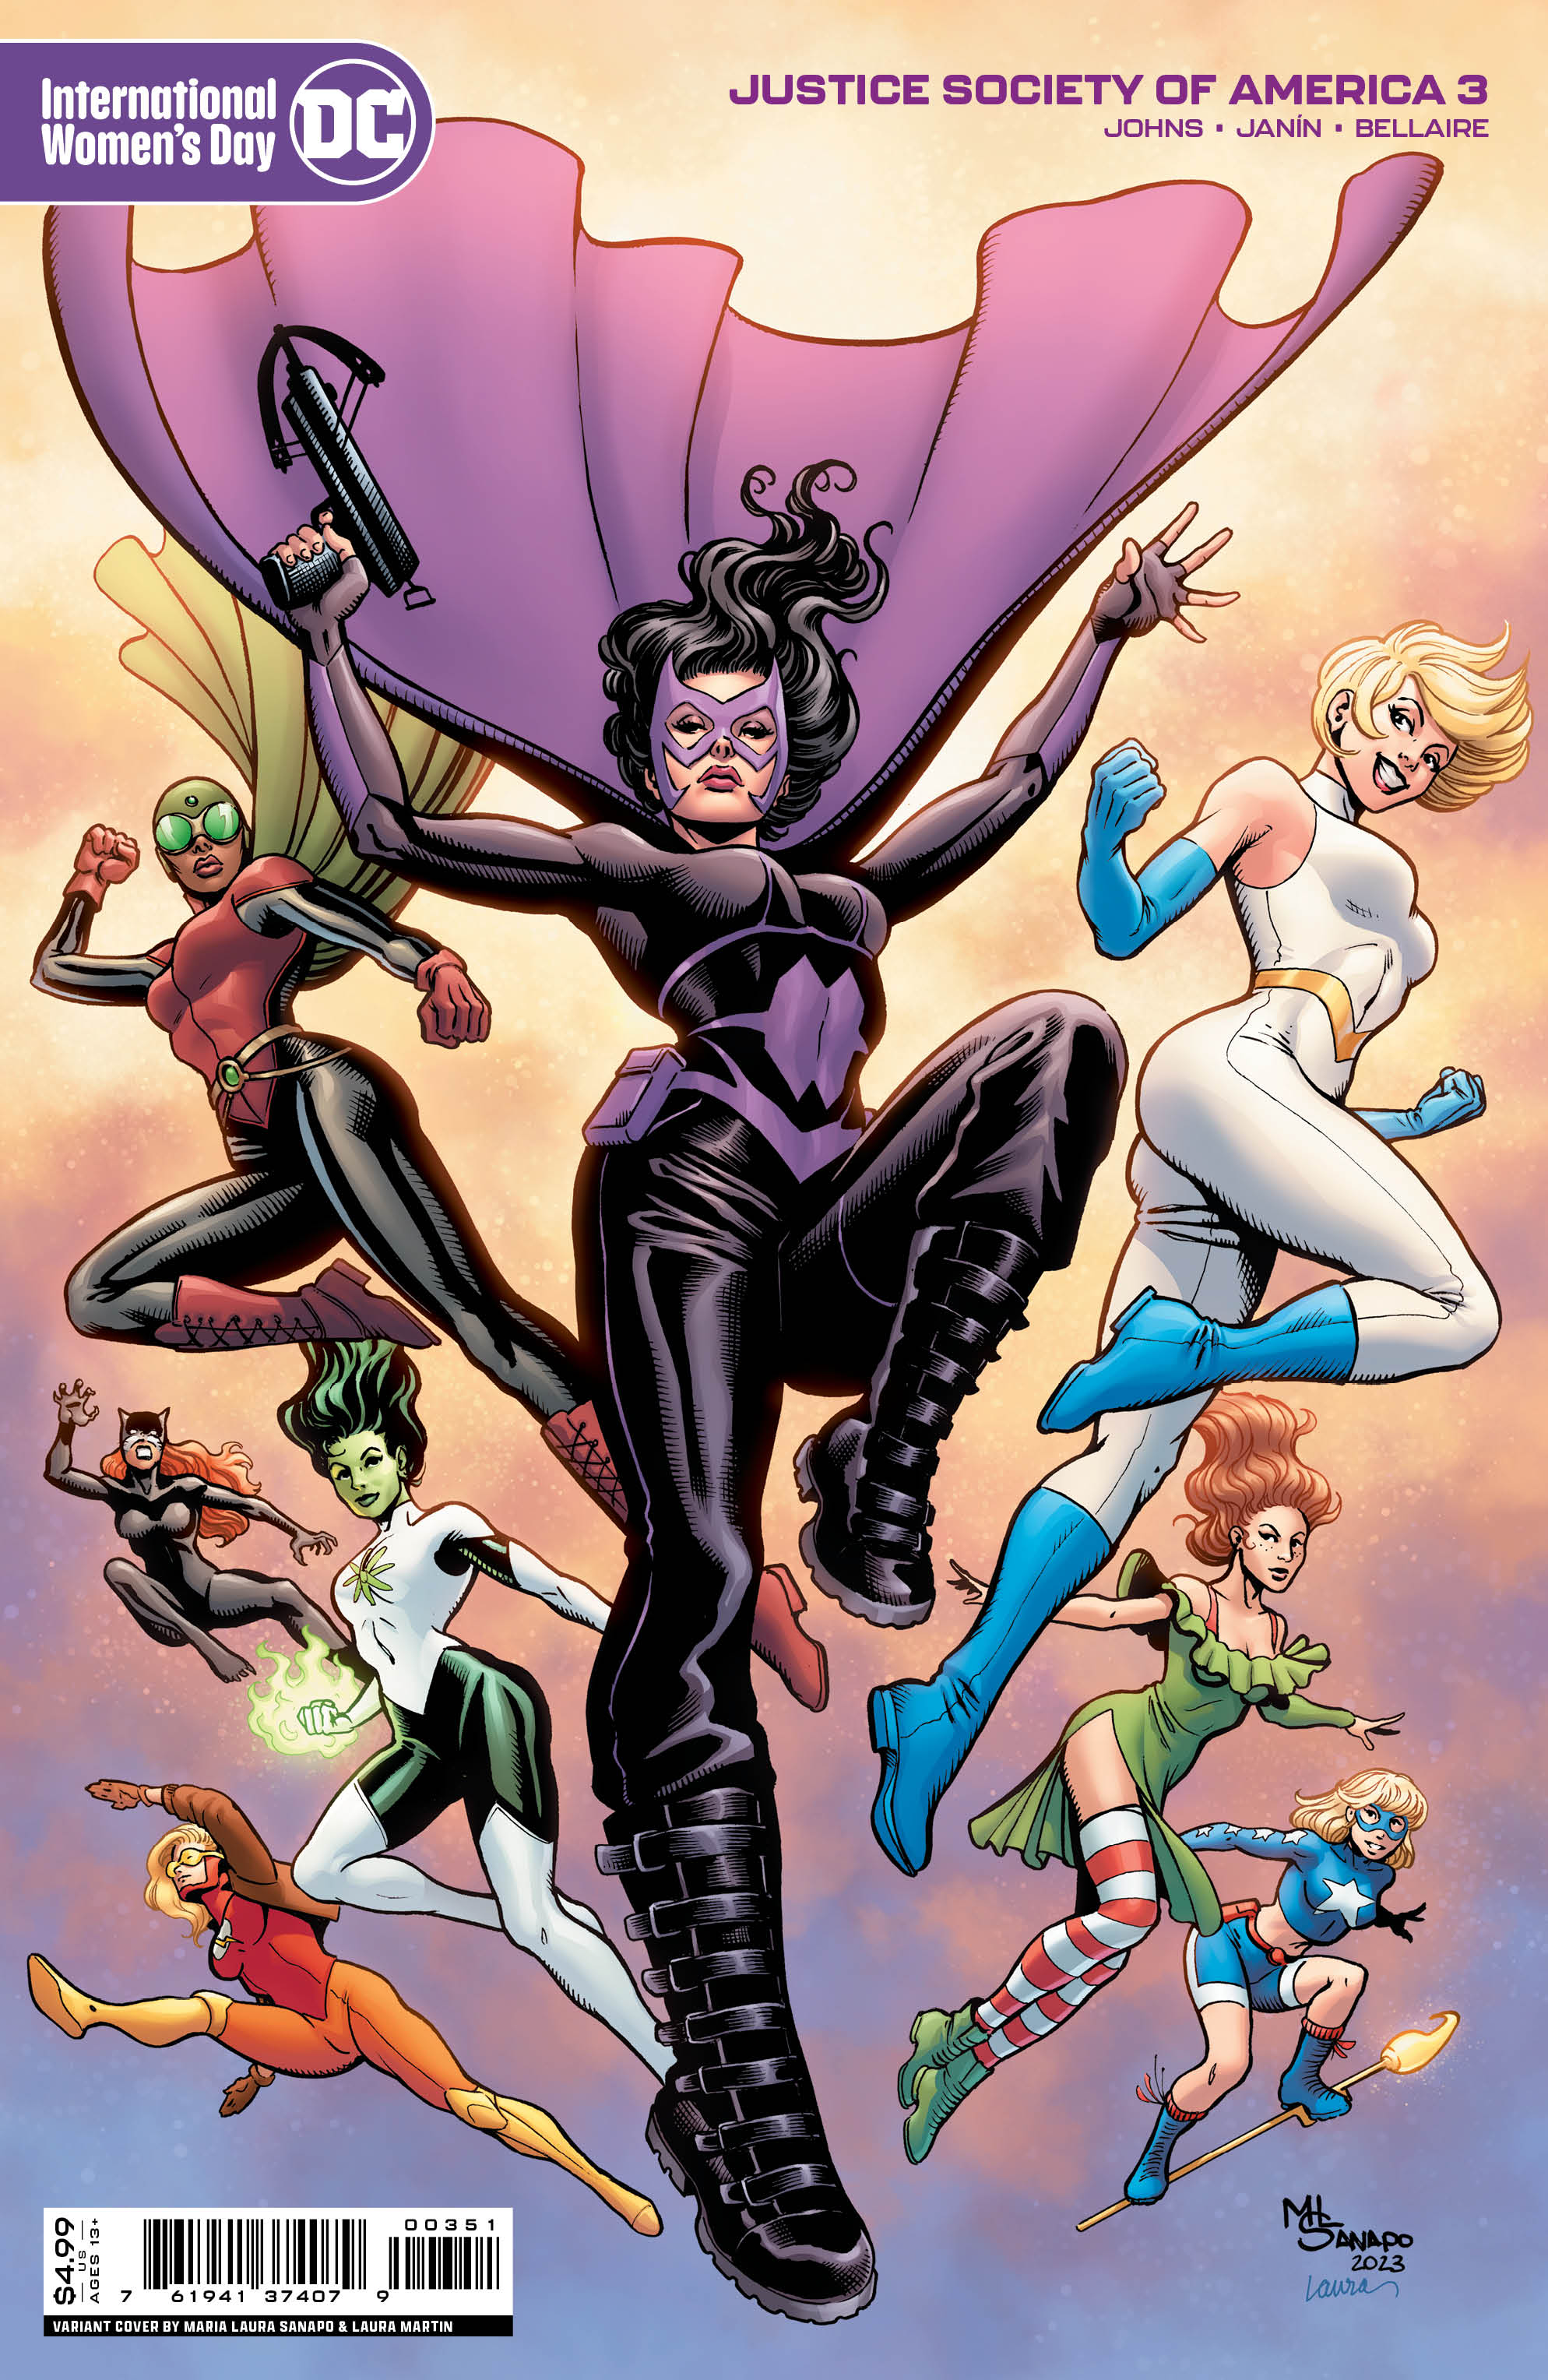 Illustartion of flying superheroes including Huntress and Power Girl